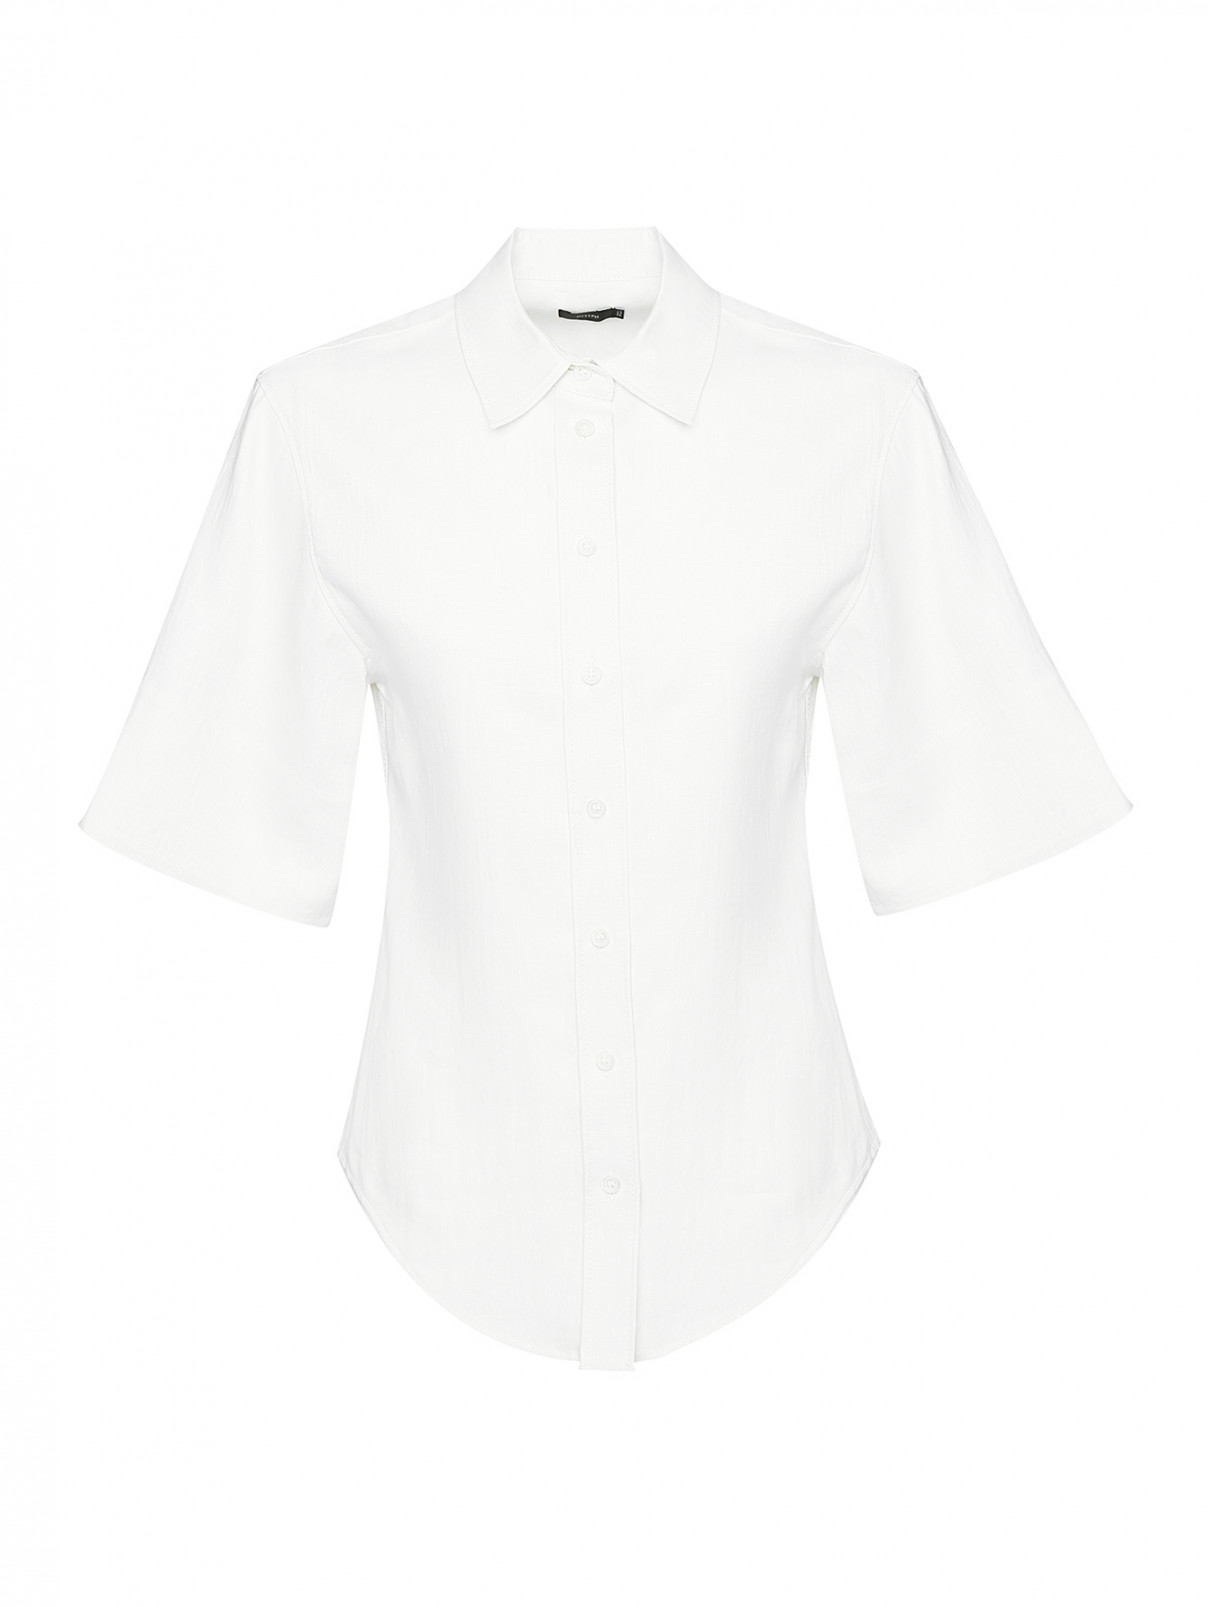 Рубашка изо льна с коротким рукавом Joseph  –  Общий вид  – Цвет:  Белый